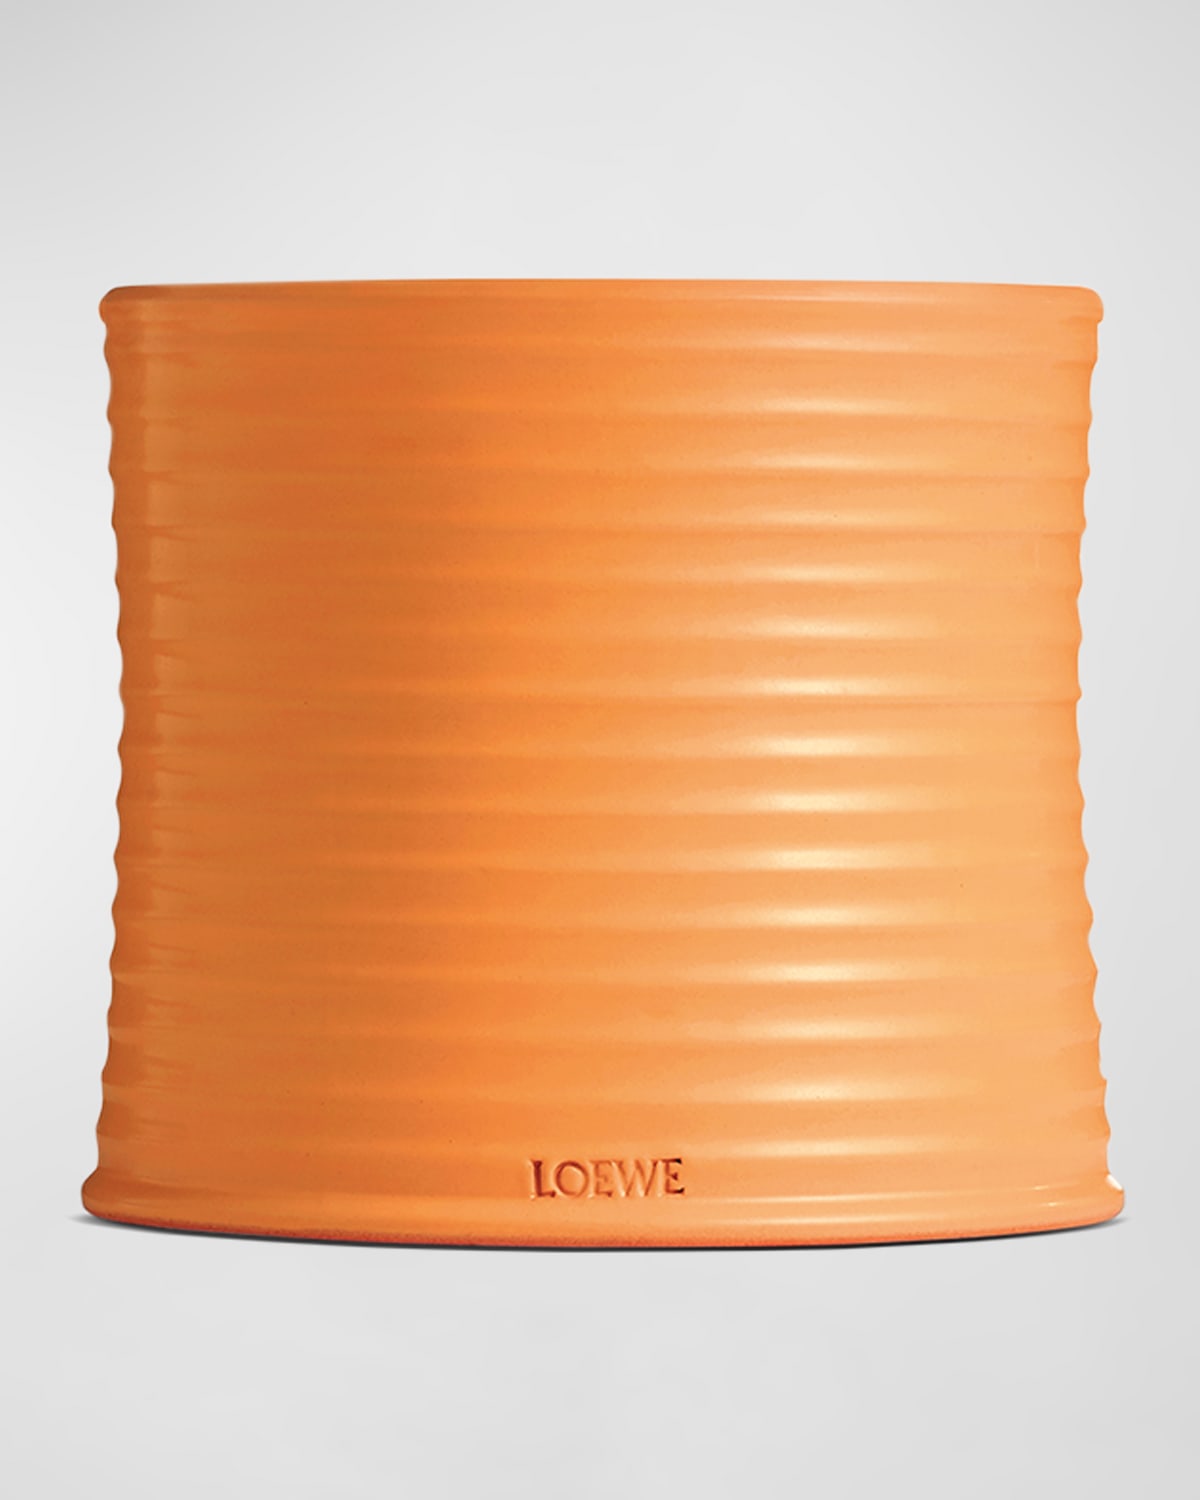 Loewe Orange Blossom Candle, 2120 G